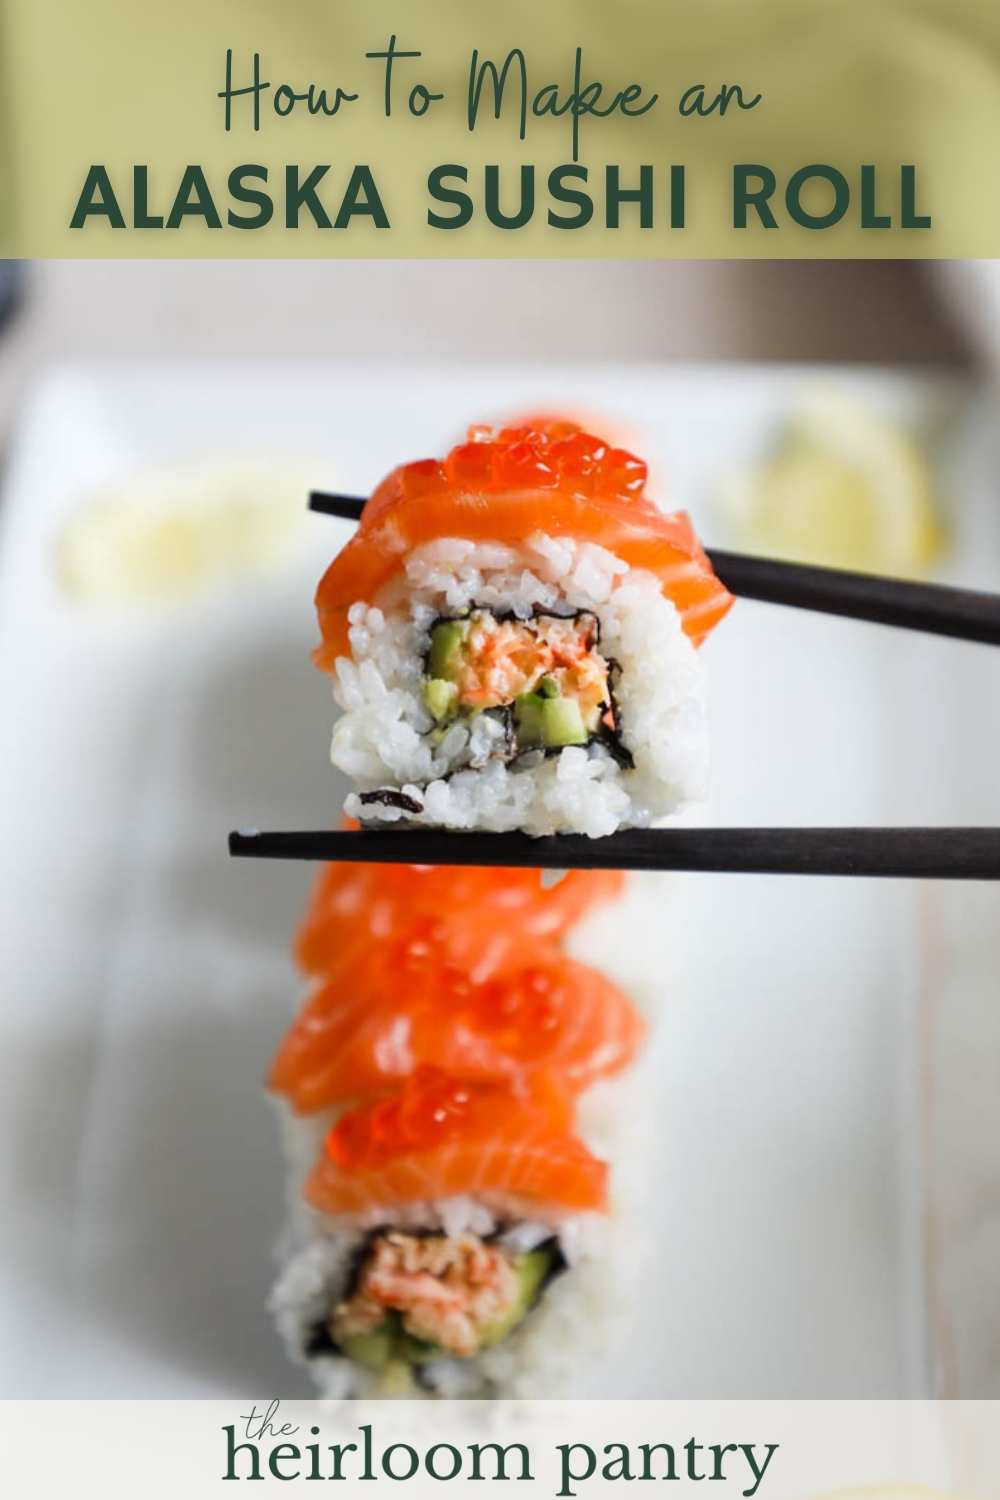 Alaska sushi roll Pinterest pin.